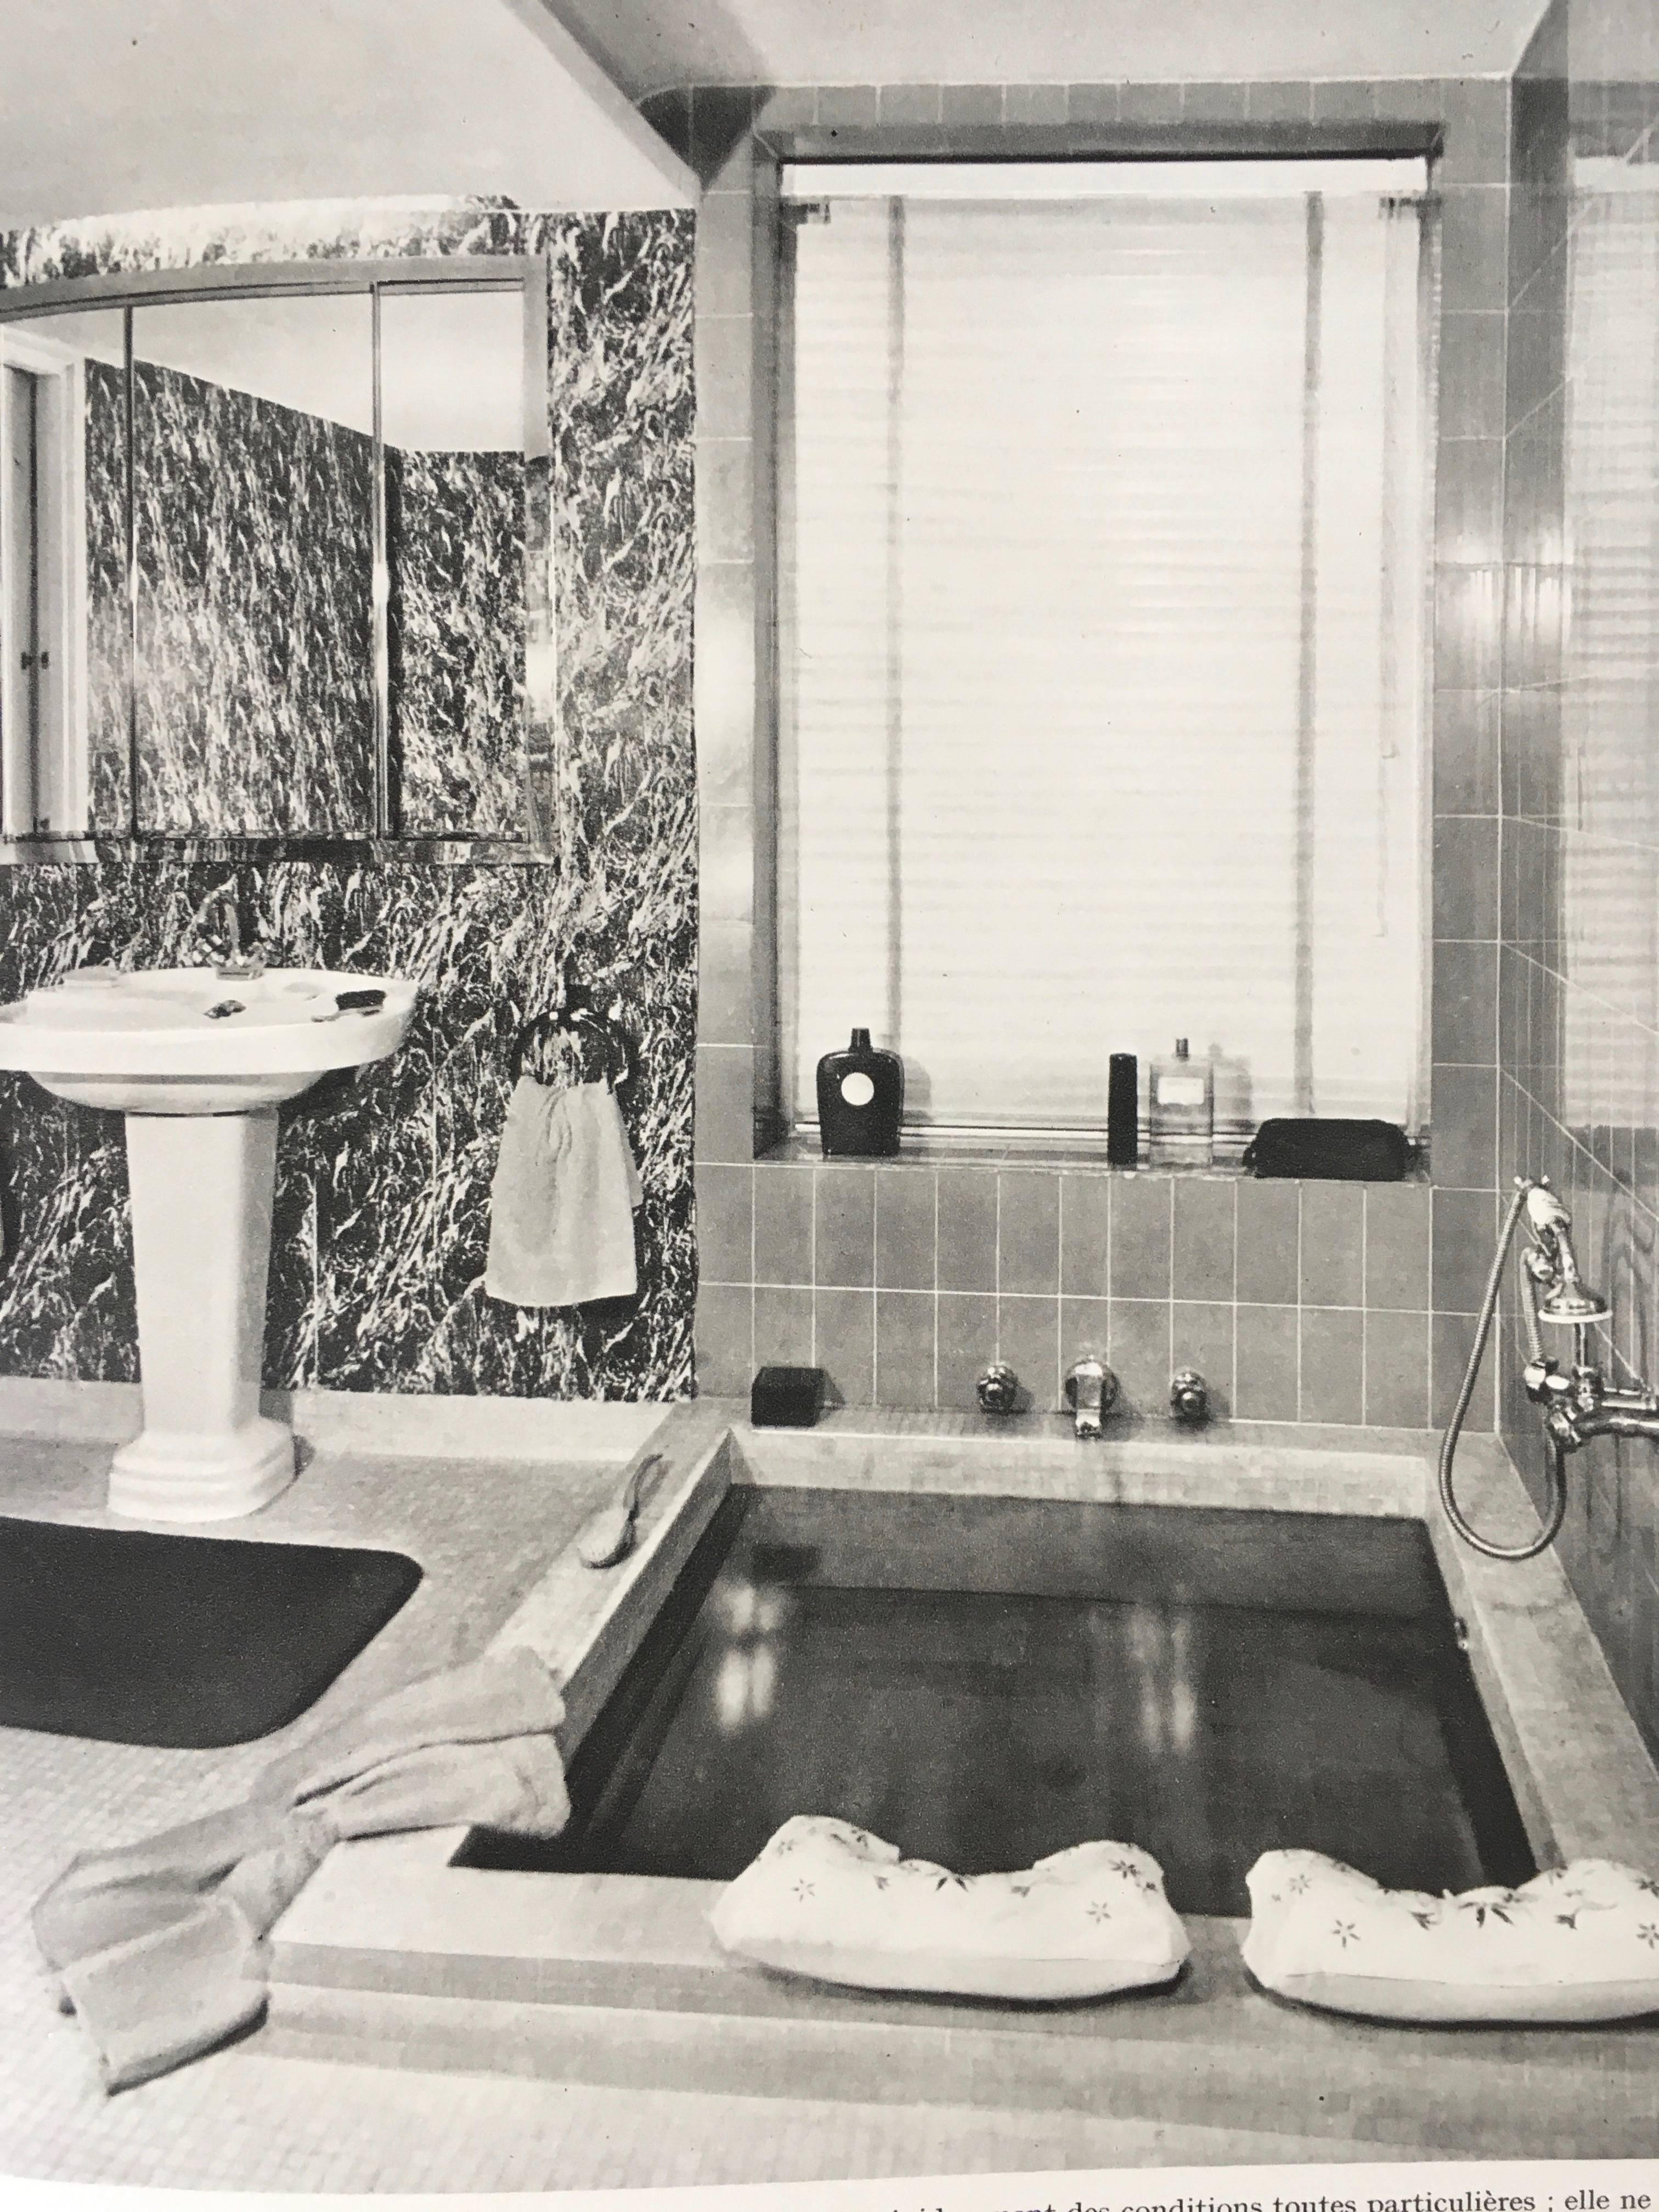 French Wonderful Book on Bathroom Interiors, 1965